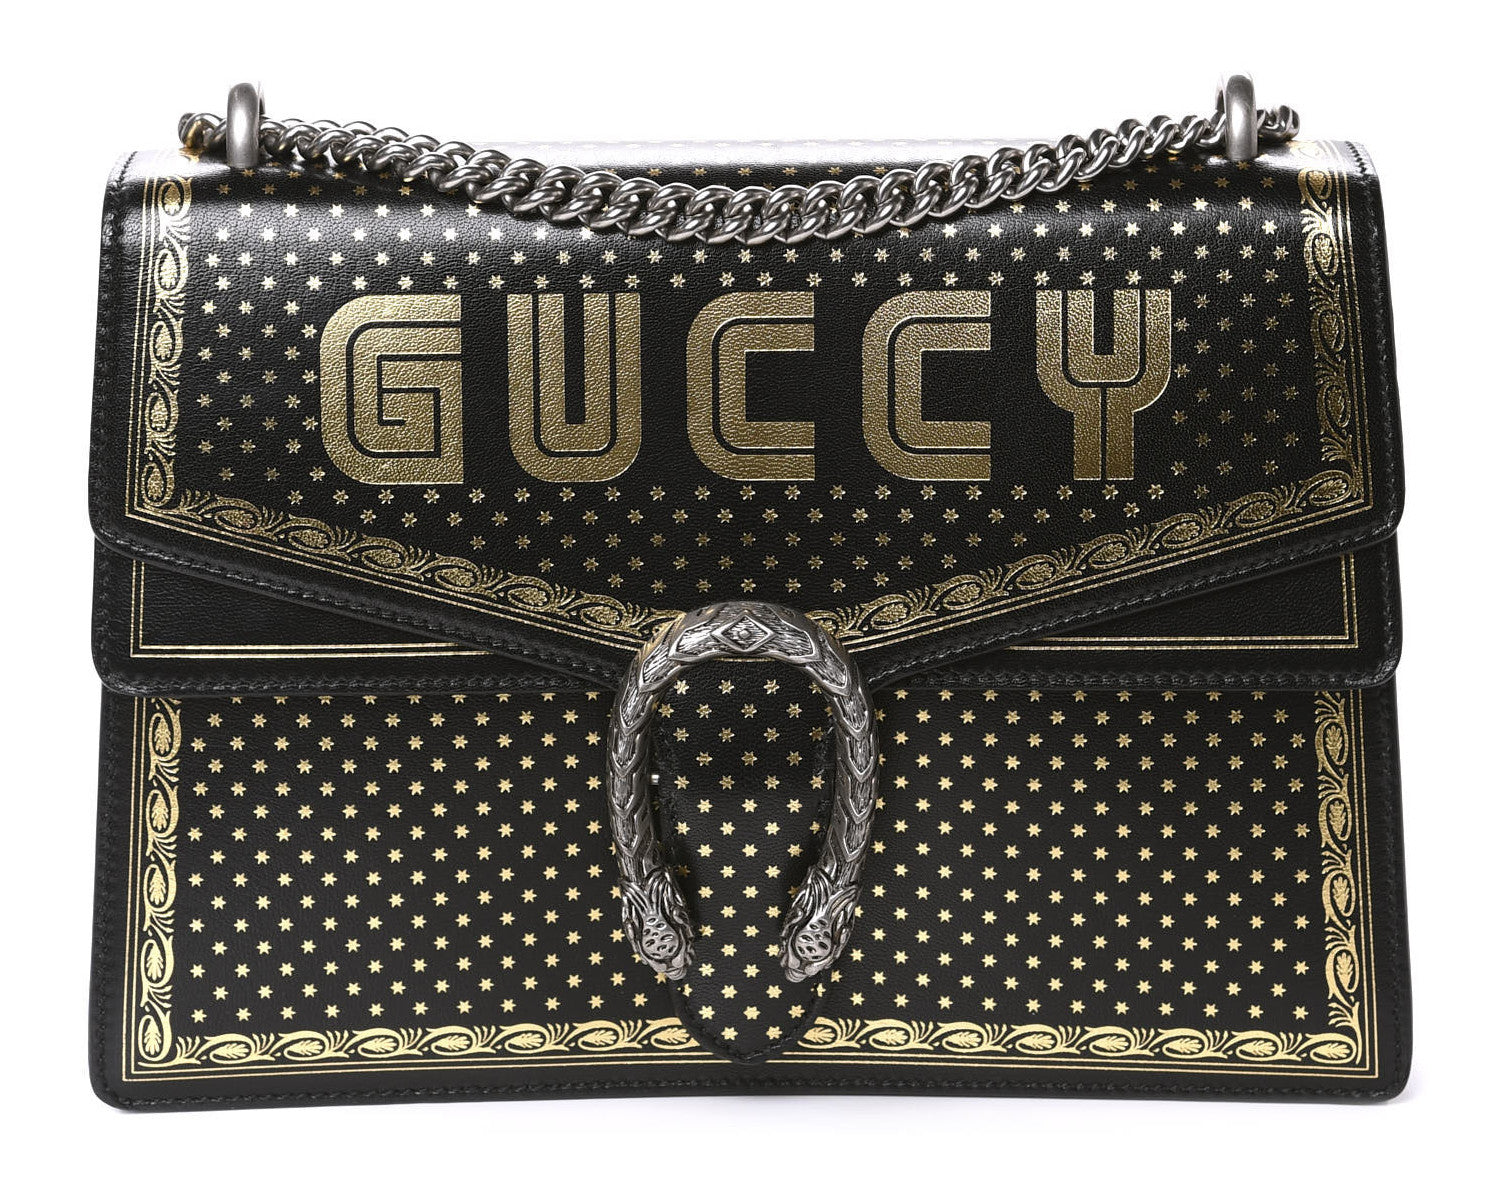 Gucci Guccy Star Print Leather - Gucci Clutch Bag